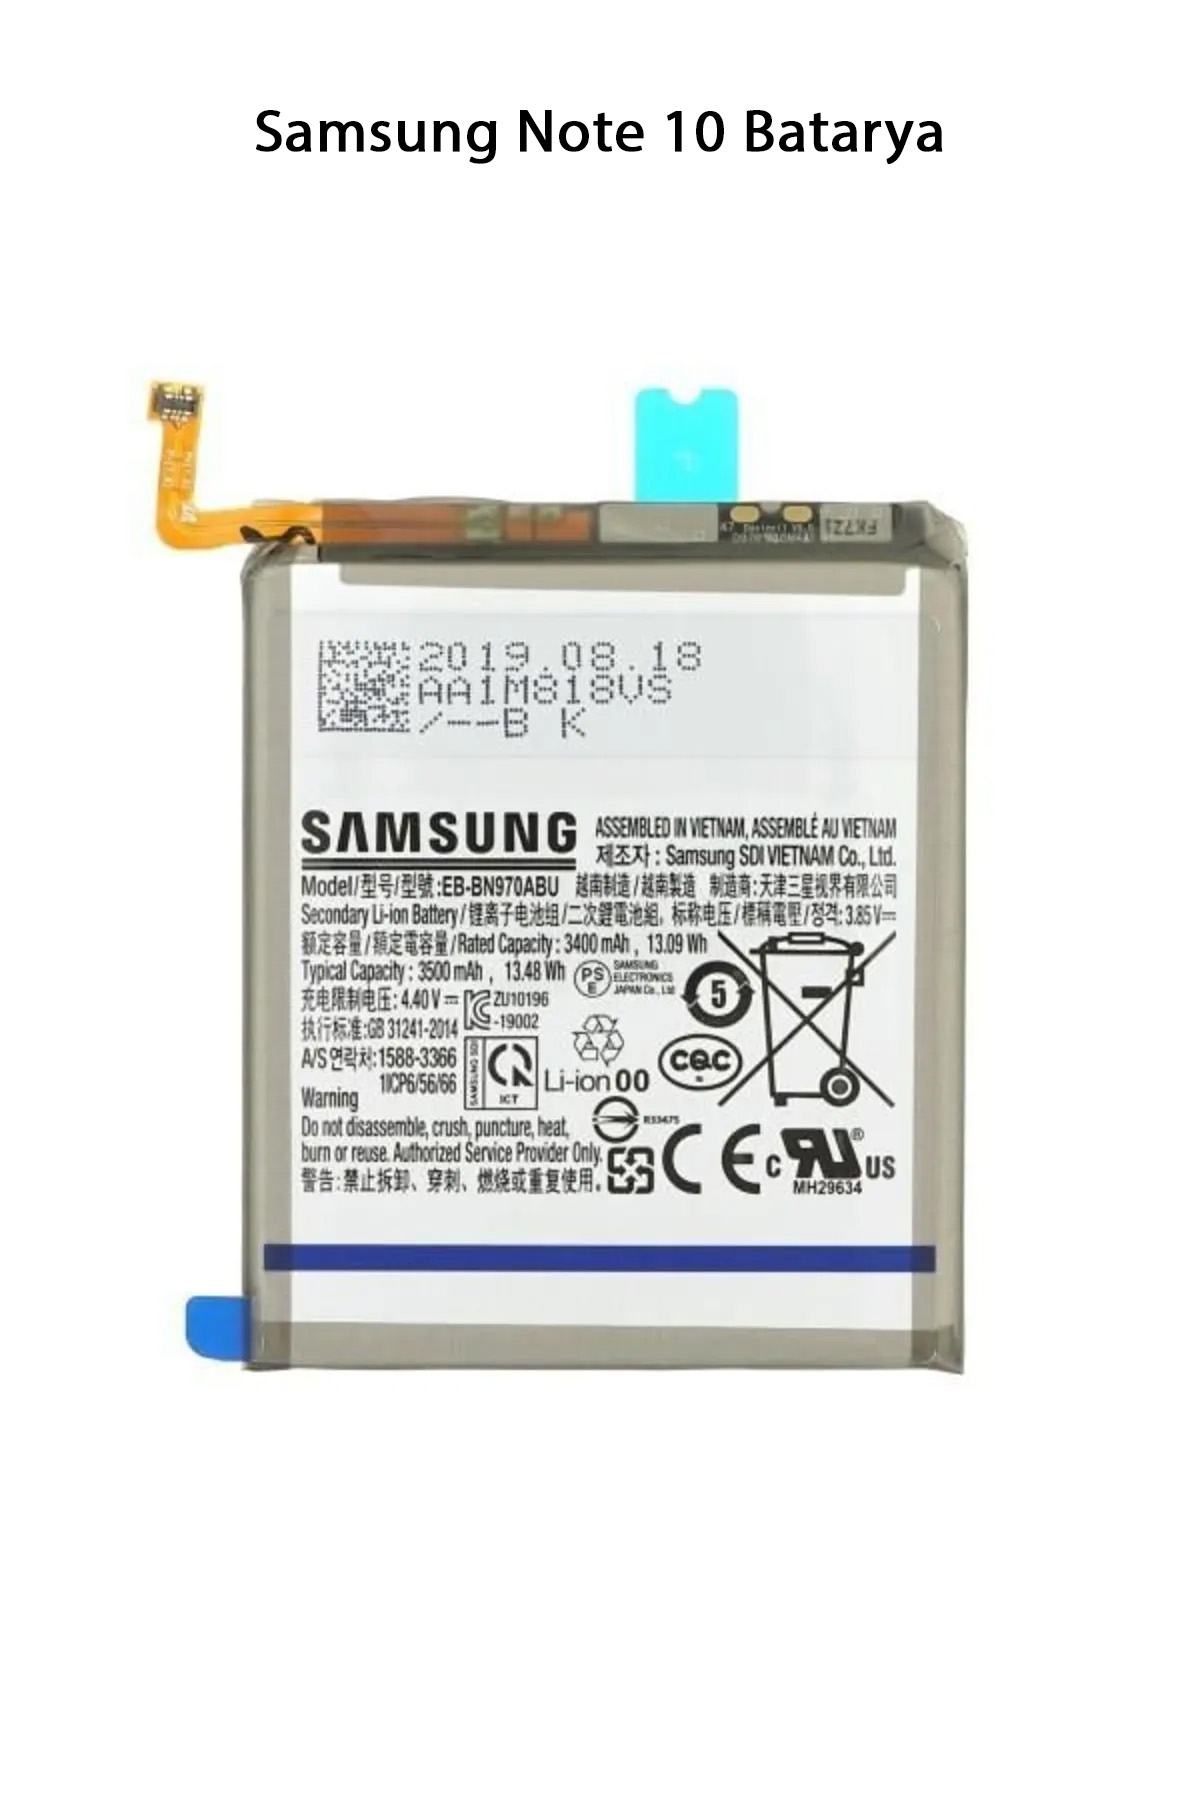 Samsung Note 10 Telefonlarla Uyumlu Batarya 3500 mAh